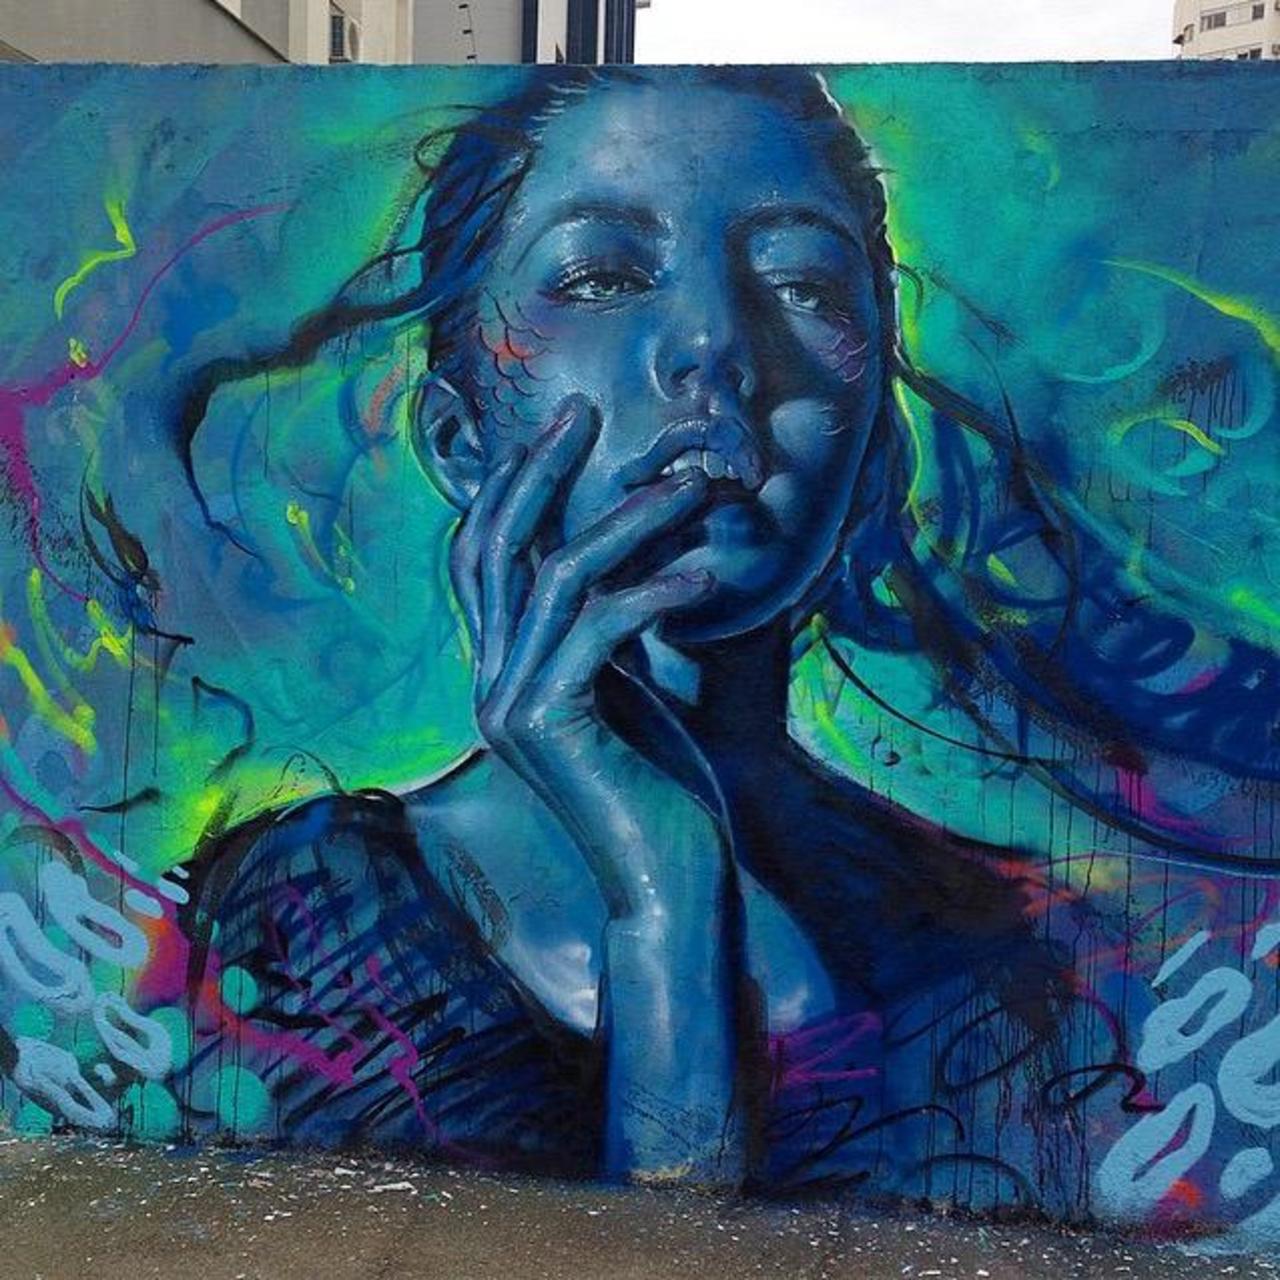 Thiago Valdi new Street Art piece titled 'Day Dreamer'

#art #mural #graffiti #streetart http://t.co/r0vyLNodt6